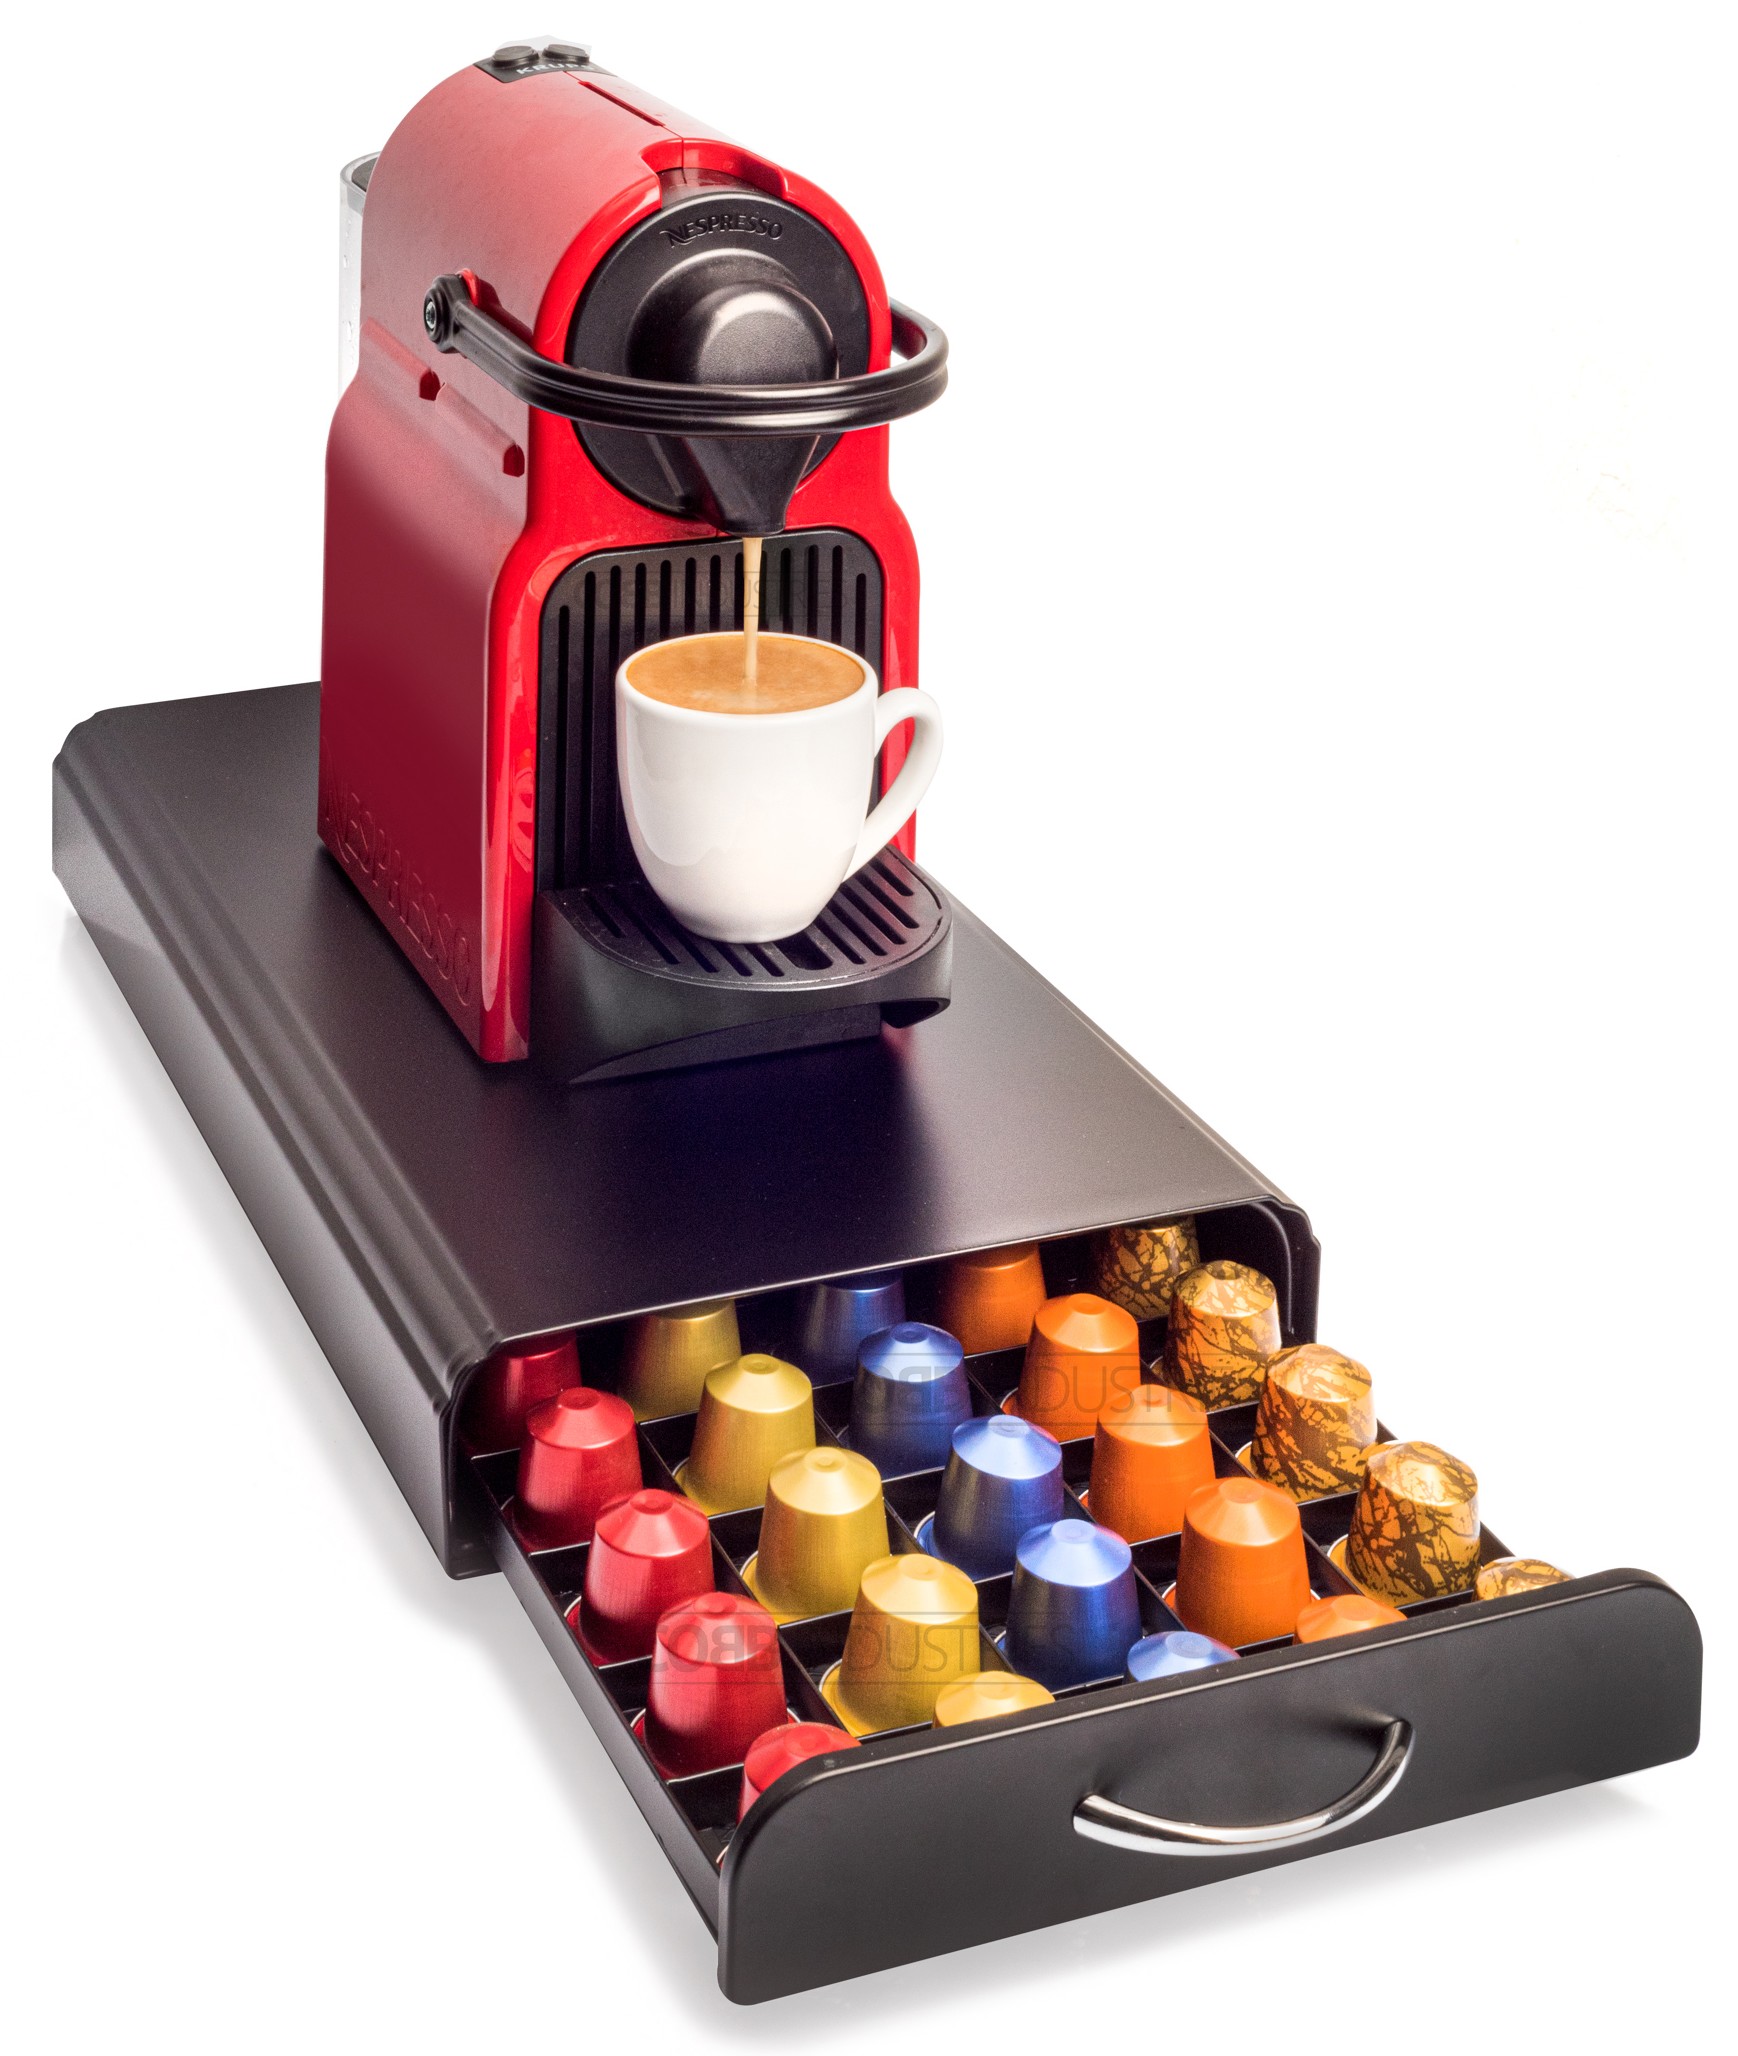 Nespresso Tiroir de rangement pour capsules, 60 capsules, noir